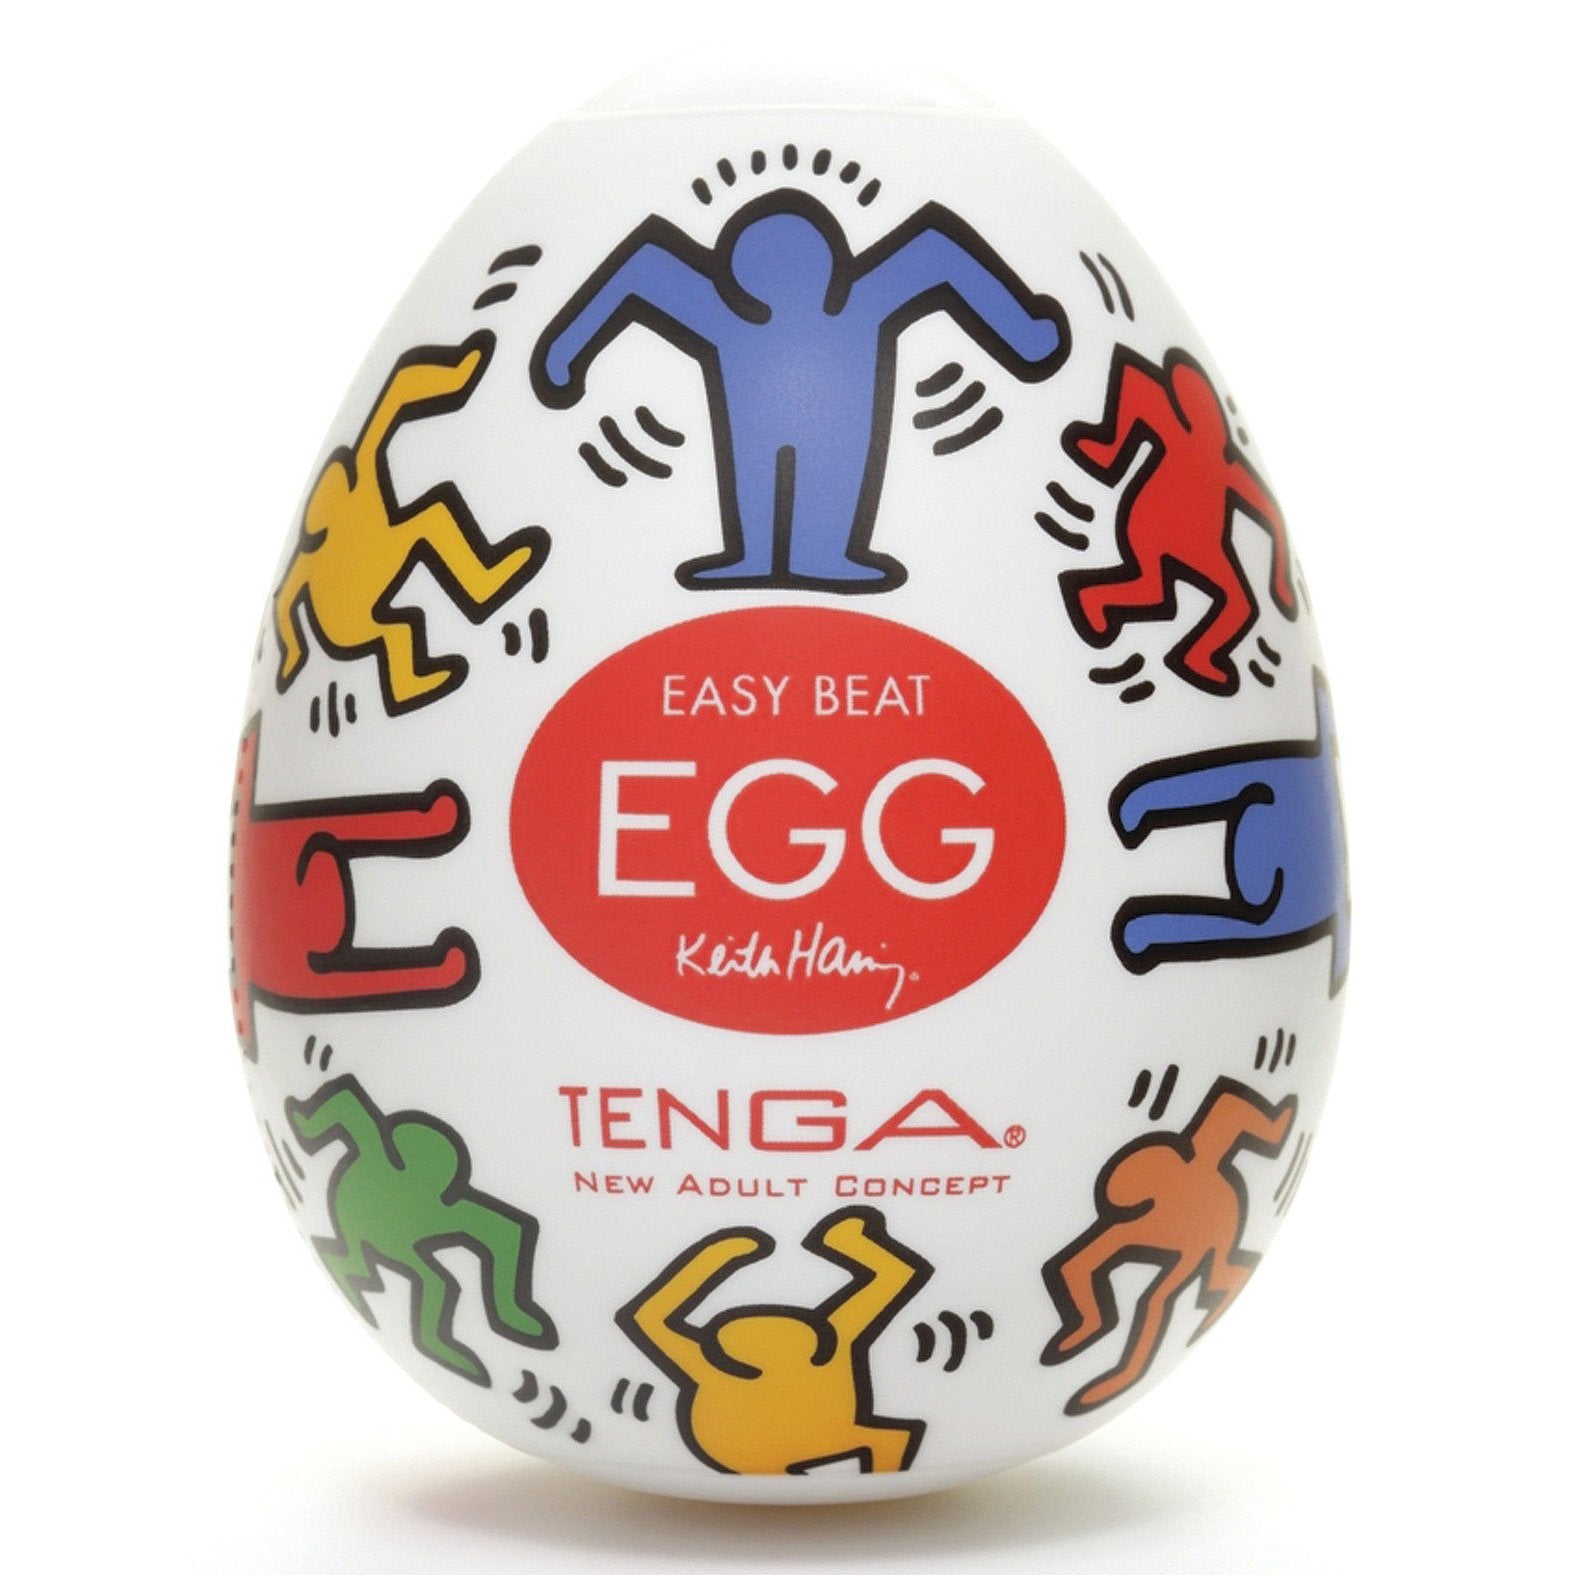 Keith Haring Tenga Egg - Dance